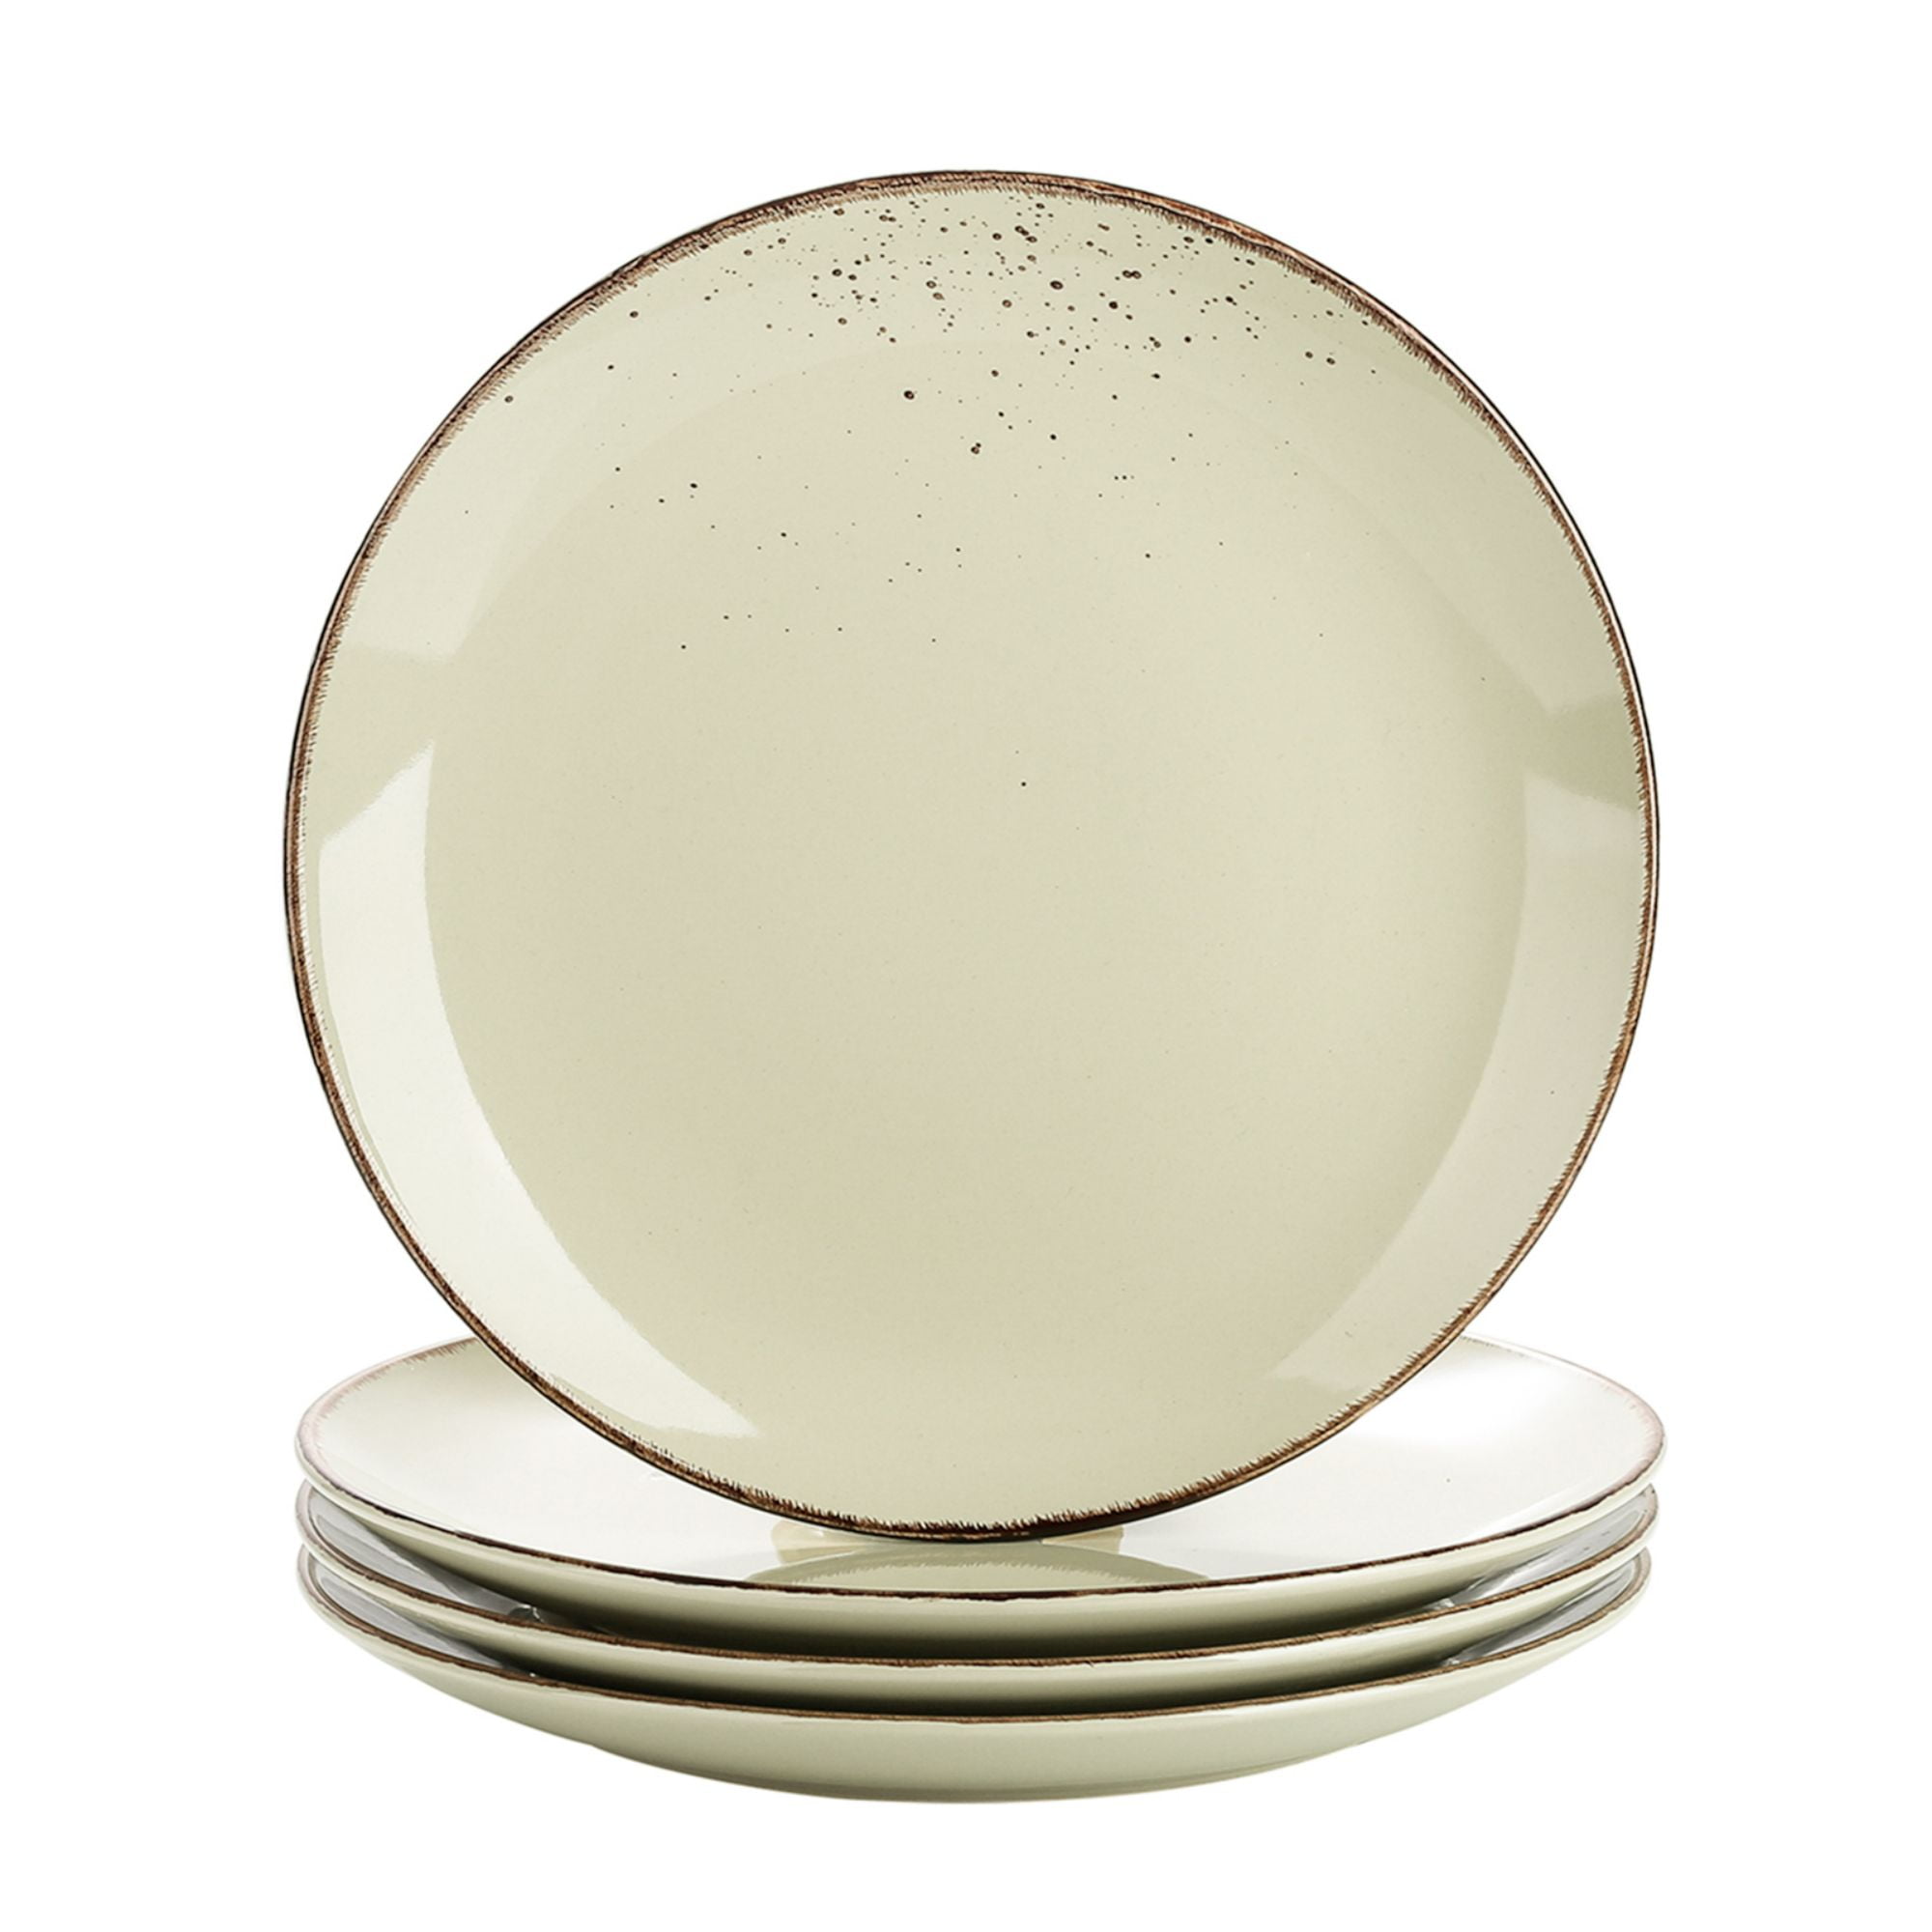 vancasso, Series Navia, 24-Piece Stoneware Dessert Plate